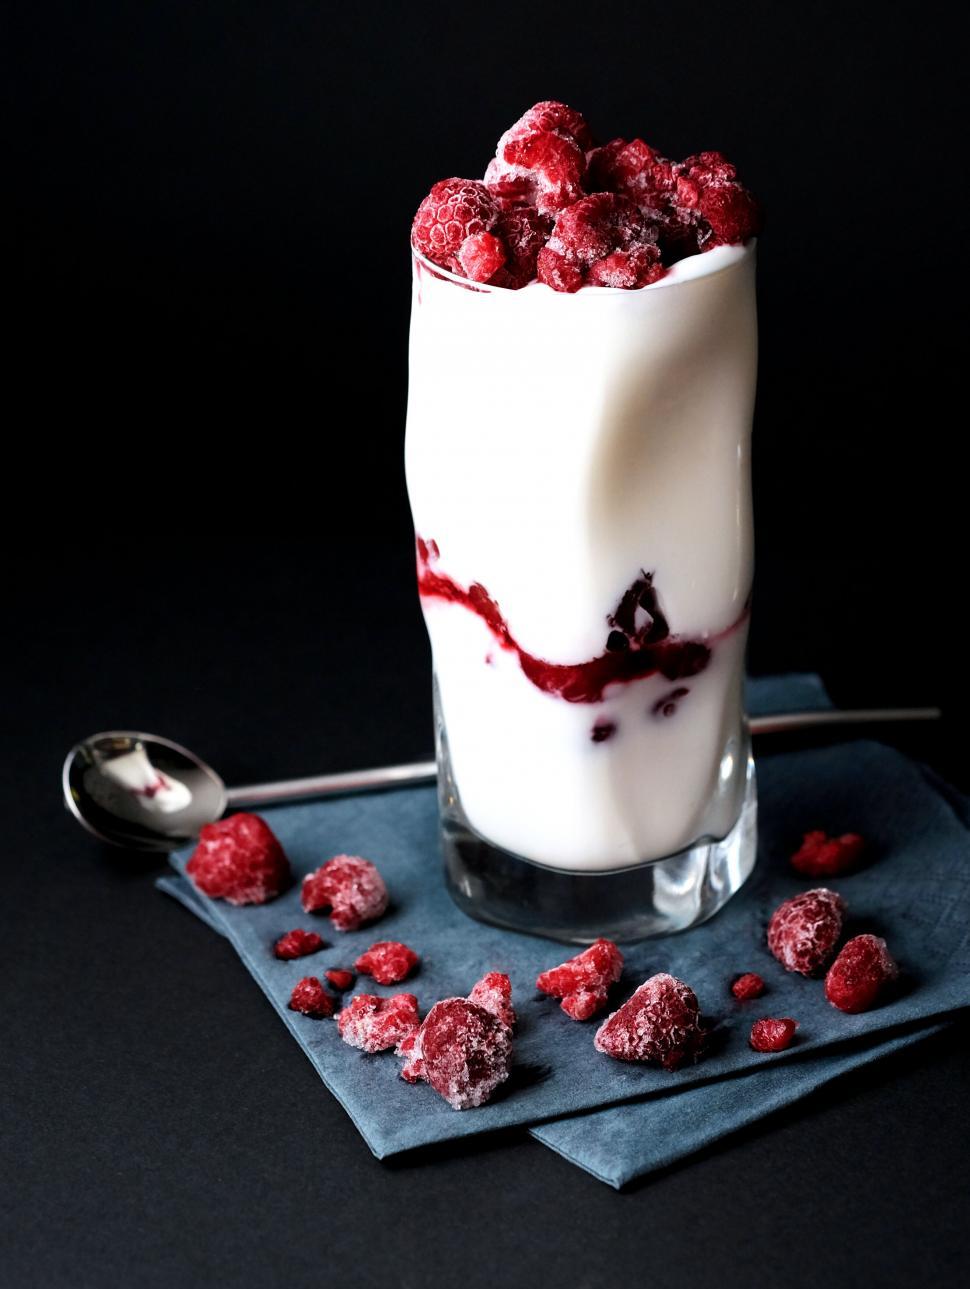 Free Image of Raspberry dessert in glass on a dark background 